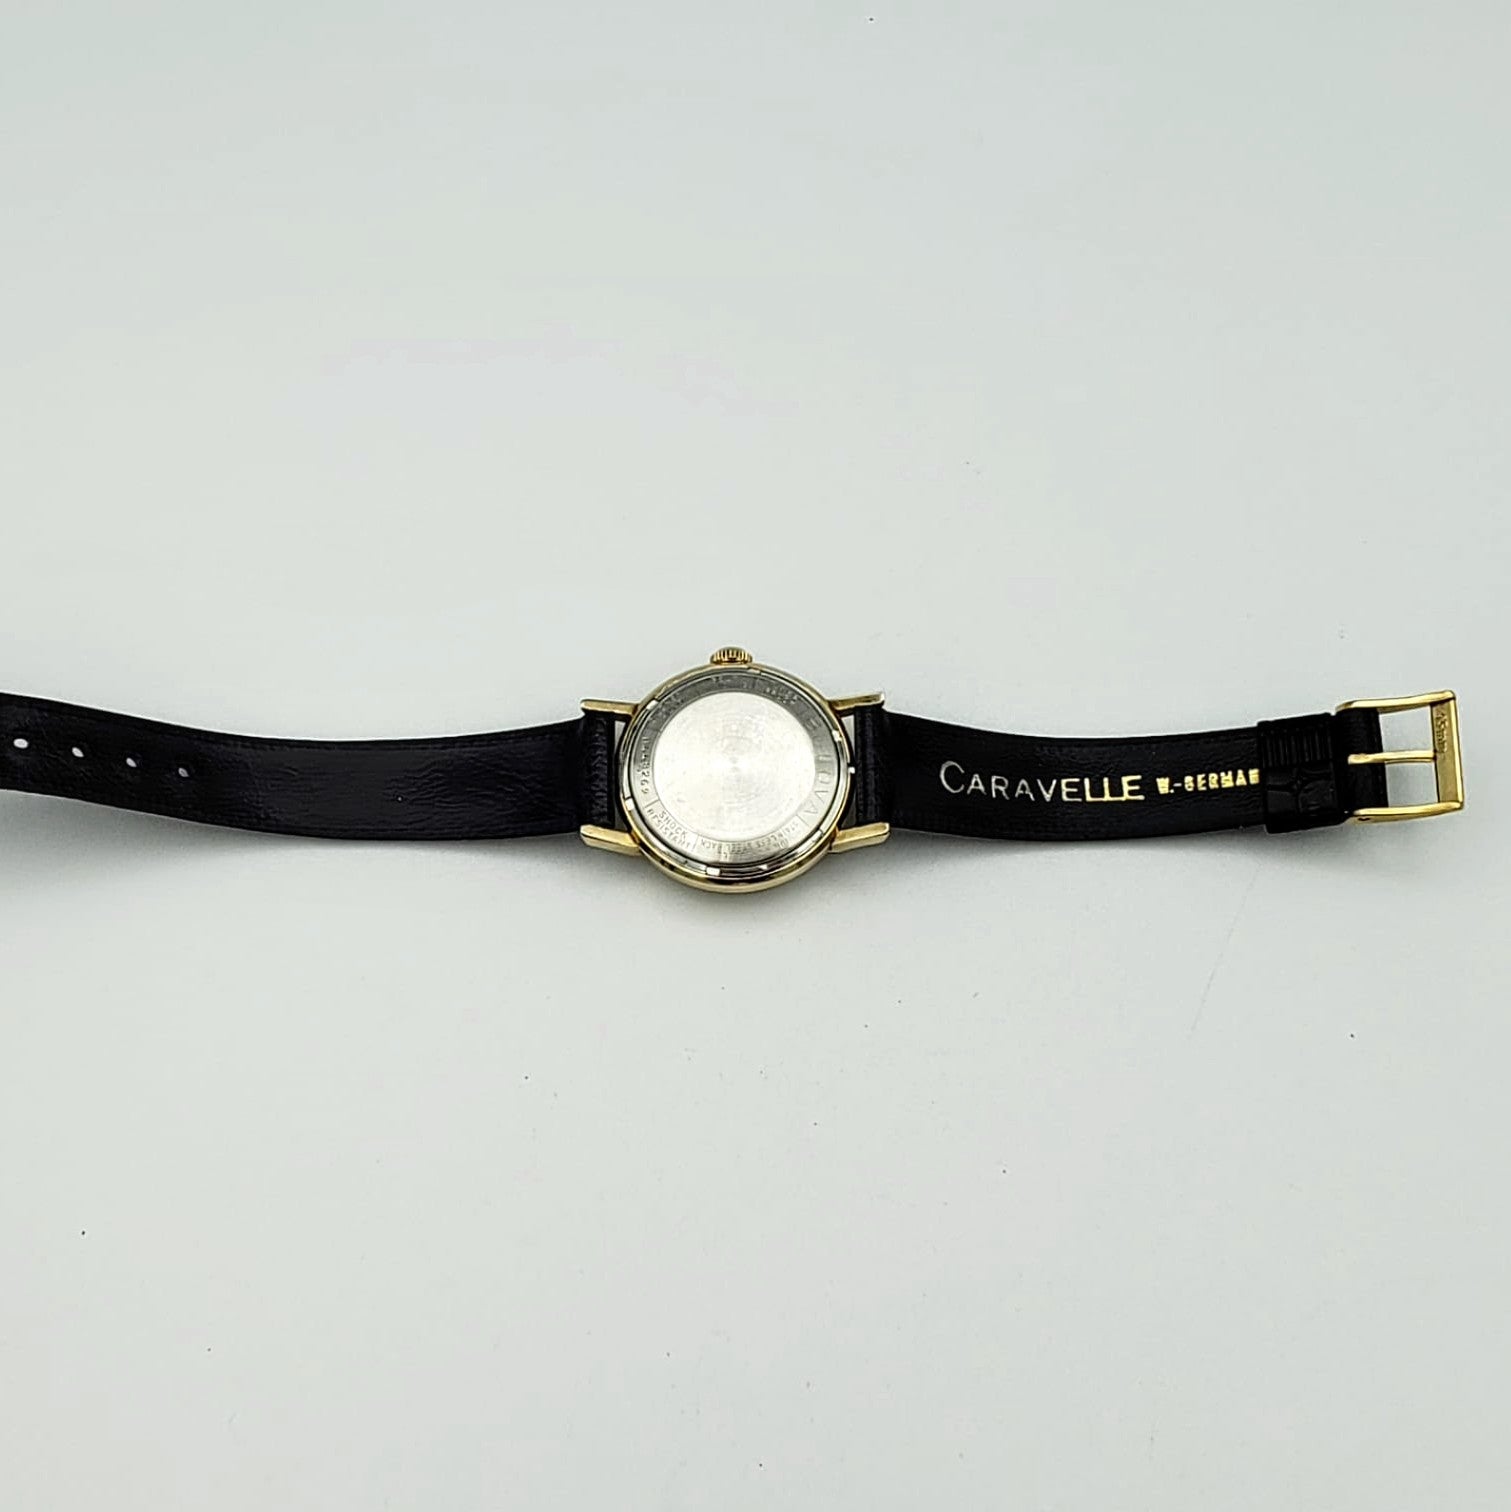 Vintage BULOVA Wristwatch with Dots on Dial Automatic Swiss Cal. 11ALAC 17J Watch